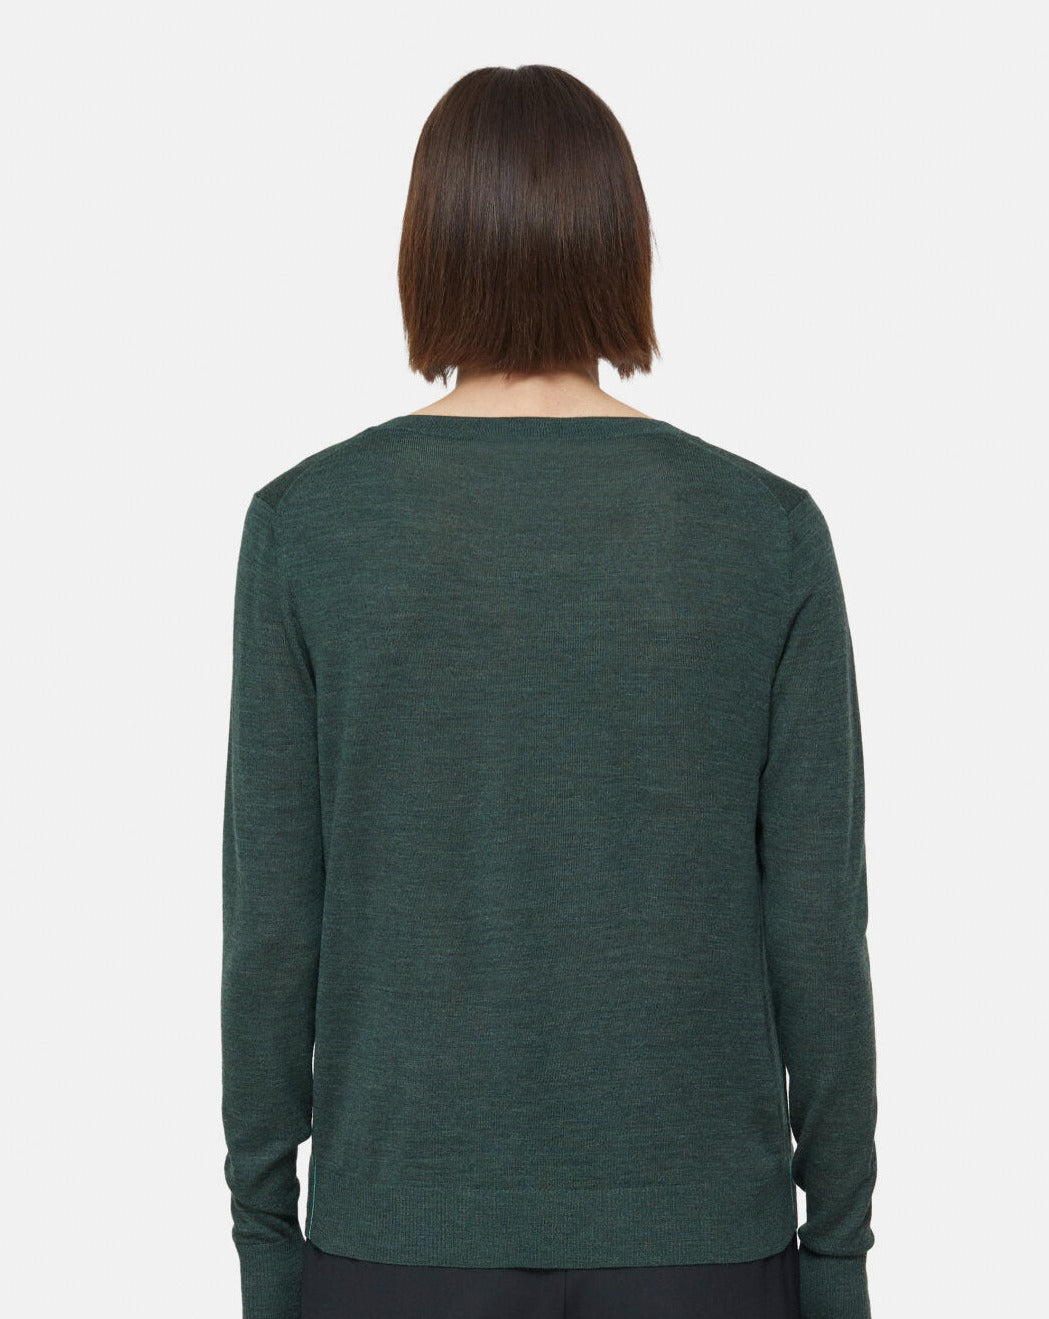 Closed Sweater Woman V-neck Long Sleeve Fern Green